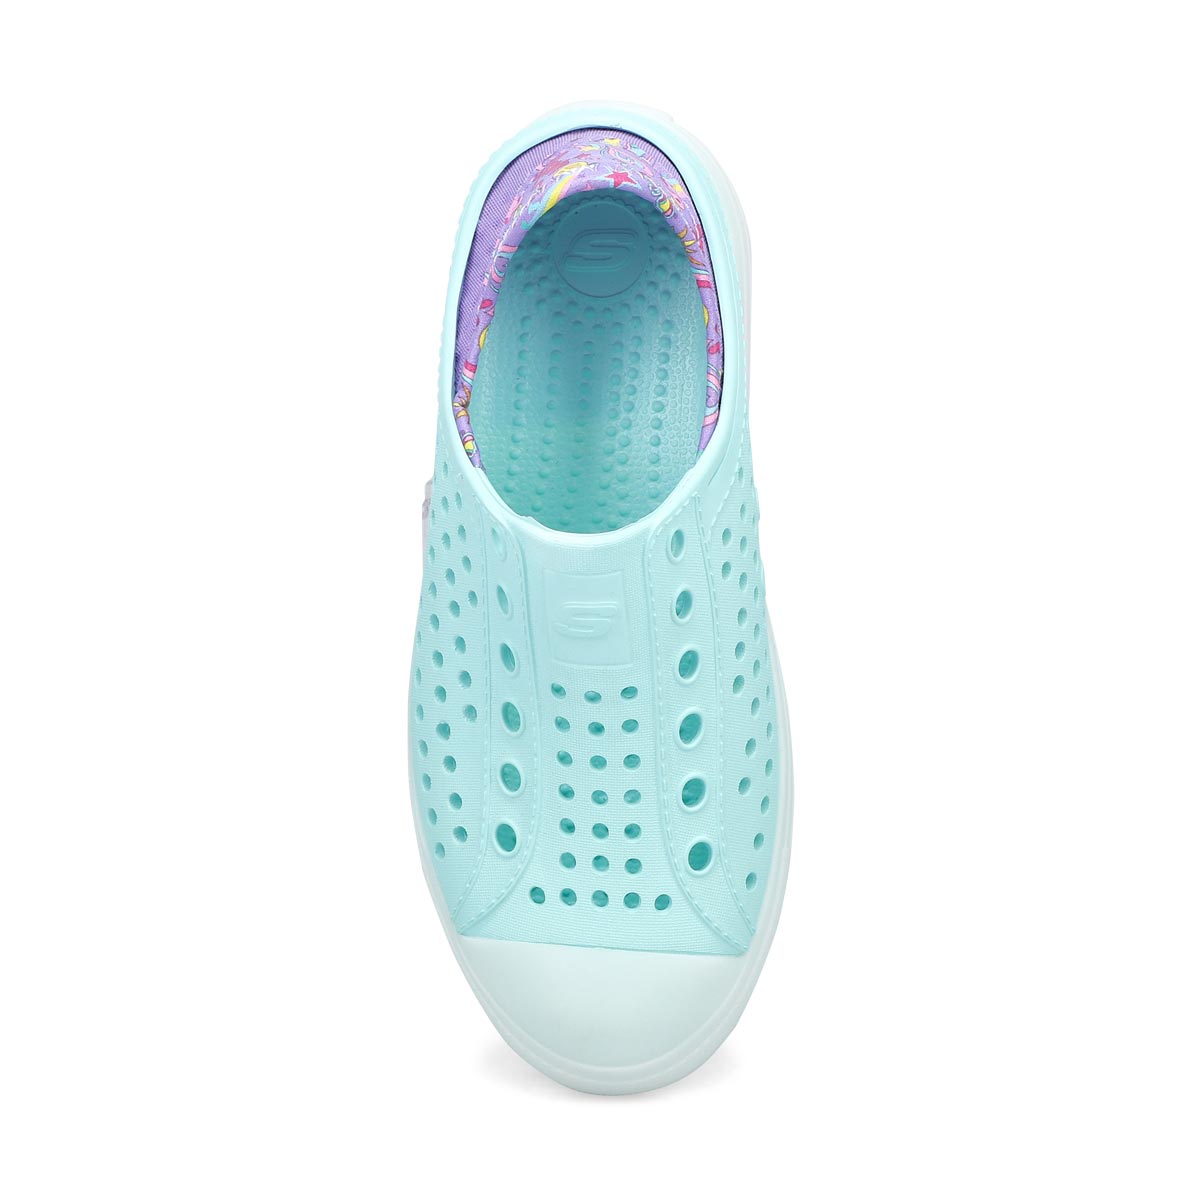 Girls' Guzman Flash Shoe - Turquoise/Lavender